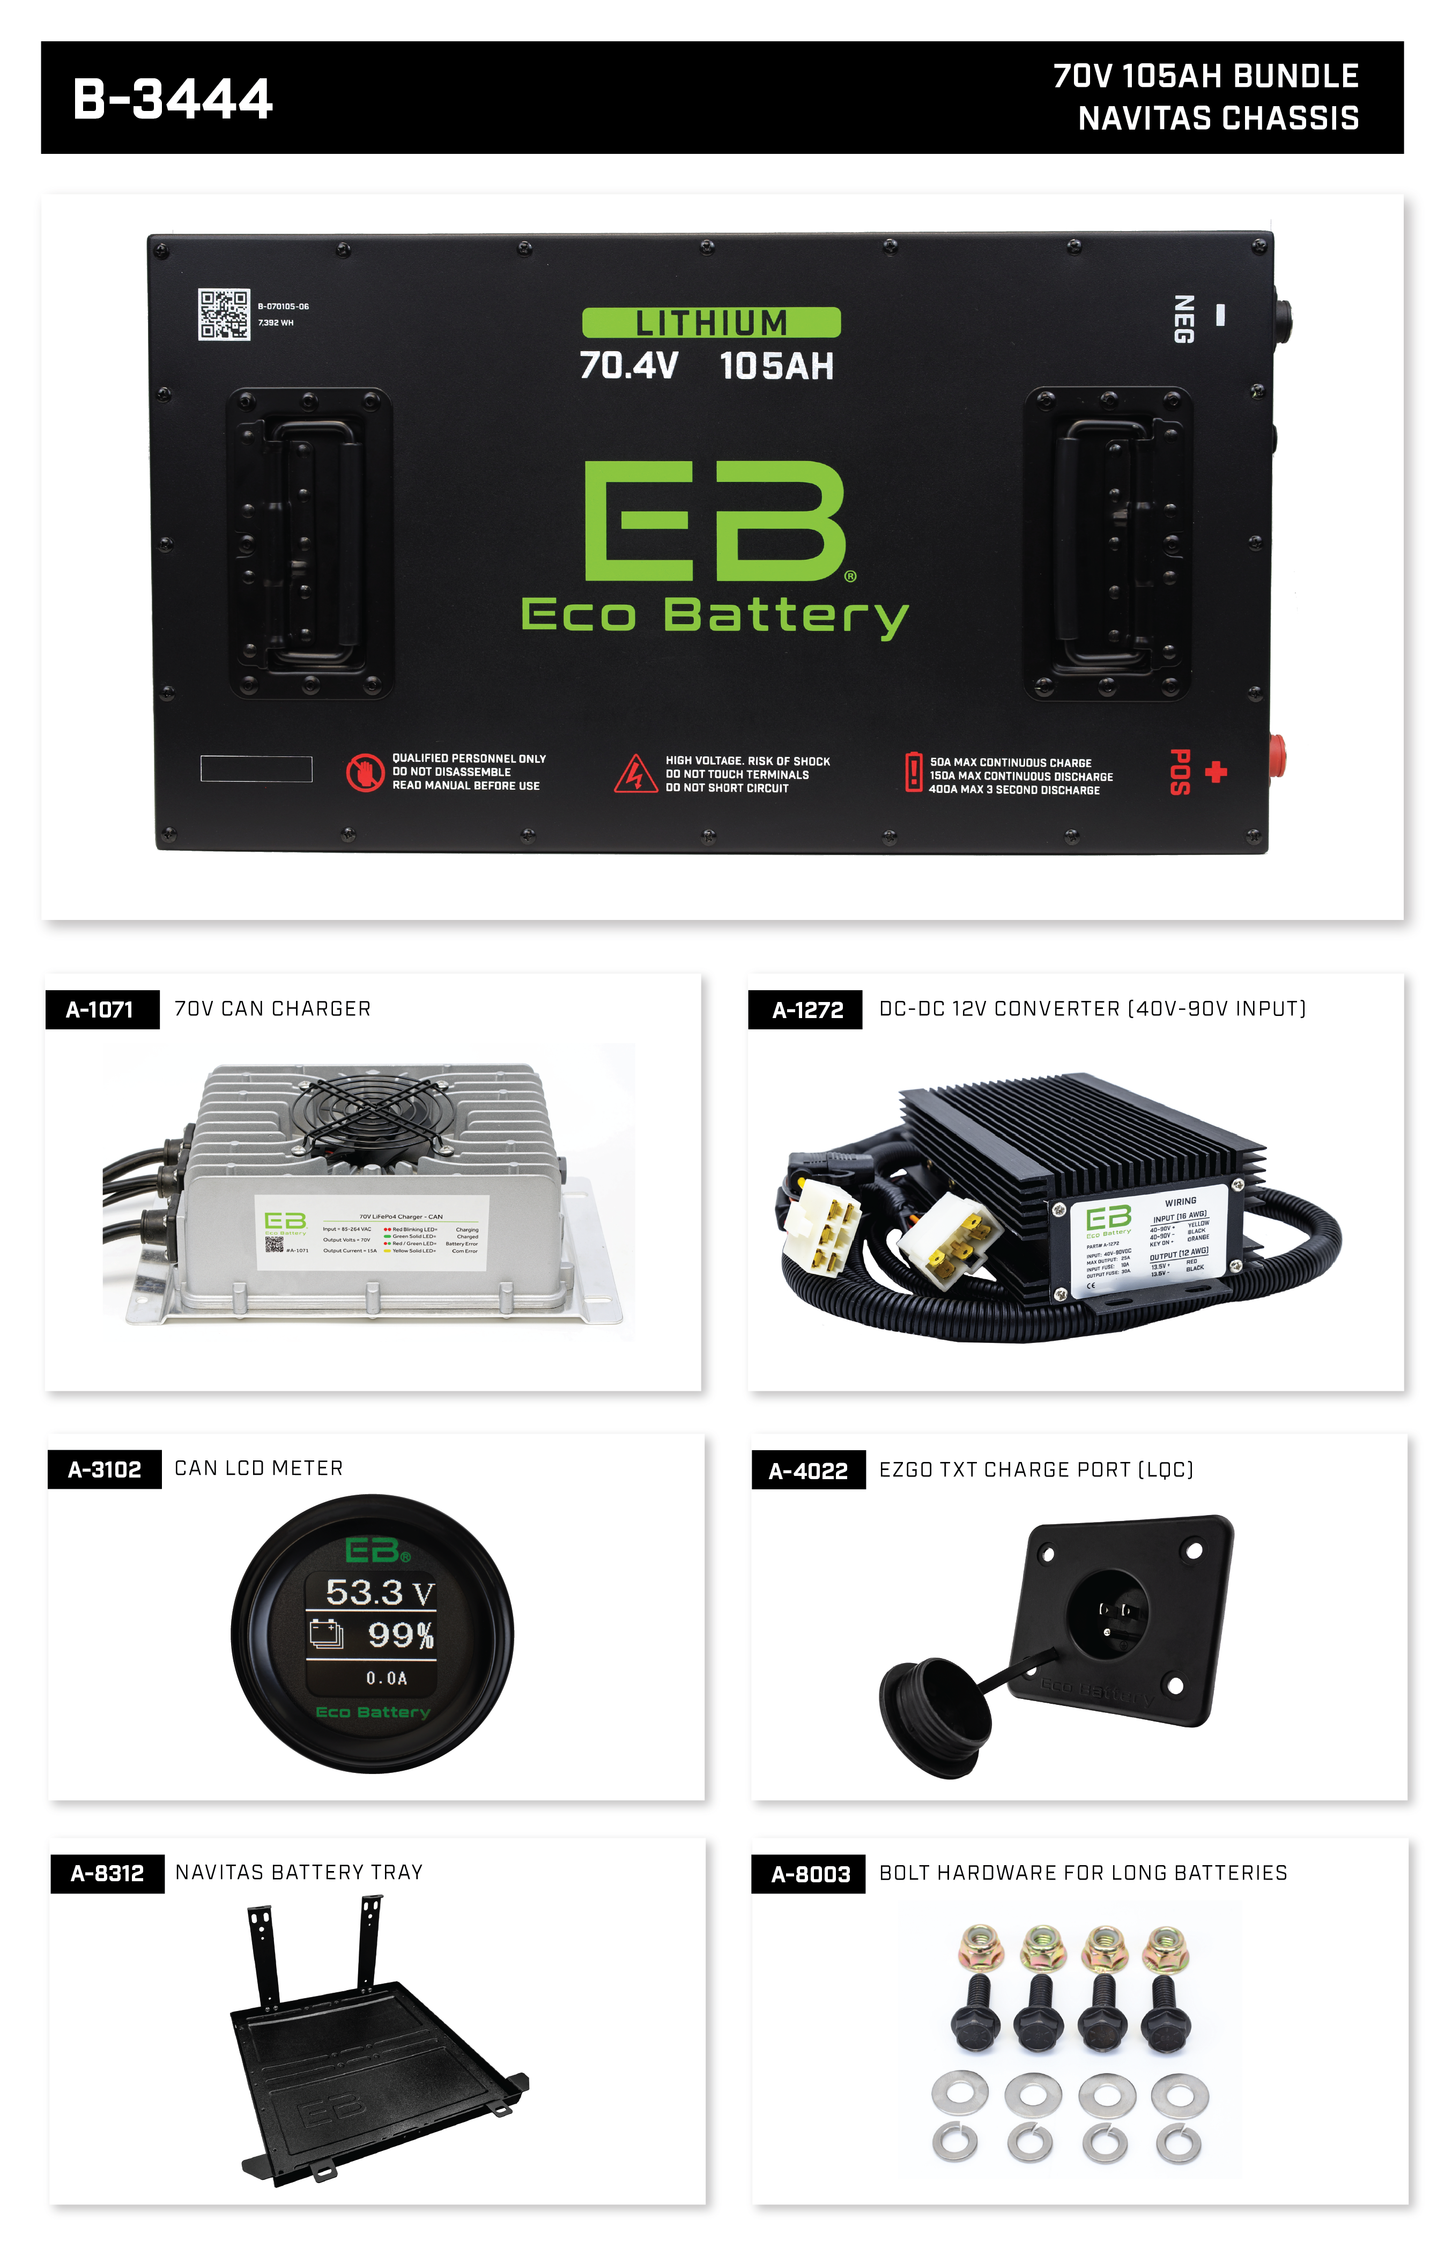 Eco Battery 72V (70v) 105Ah LifePo4 Golf Cart Lithium Battery Bundle